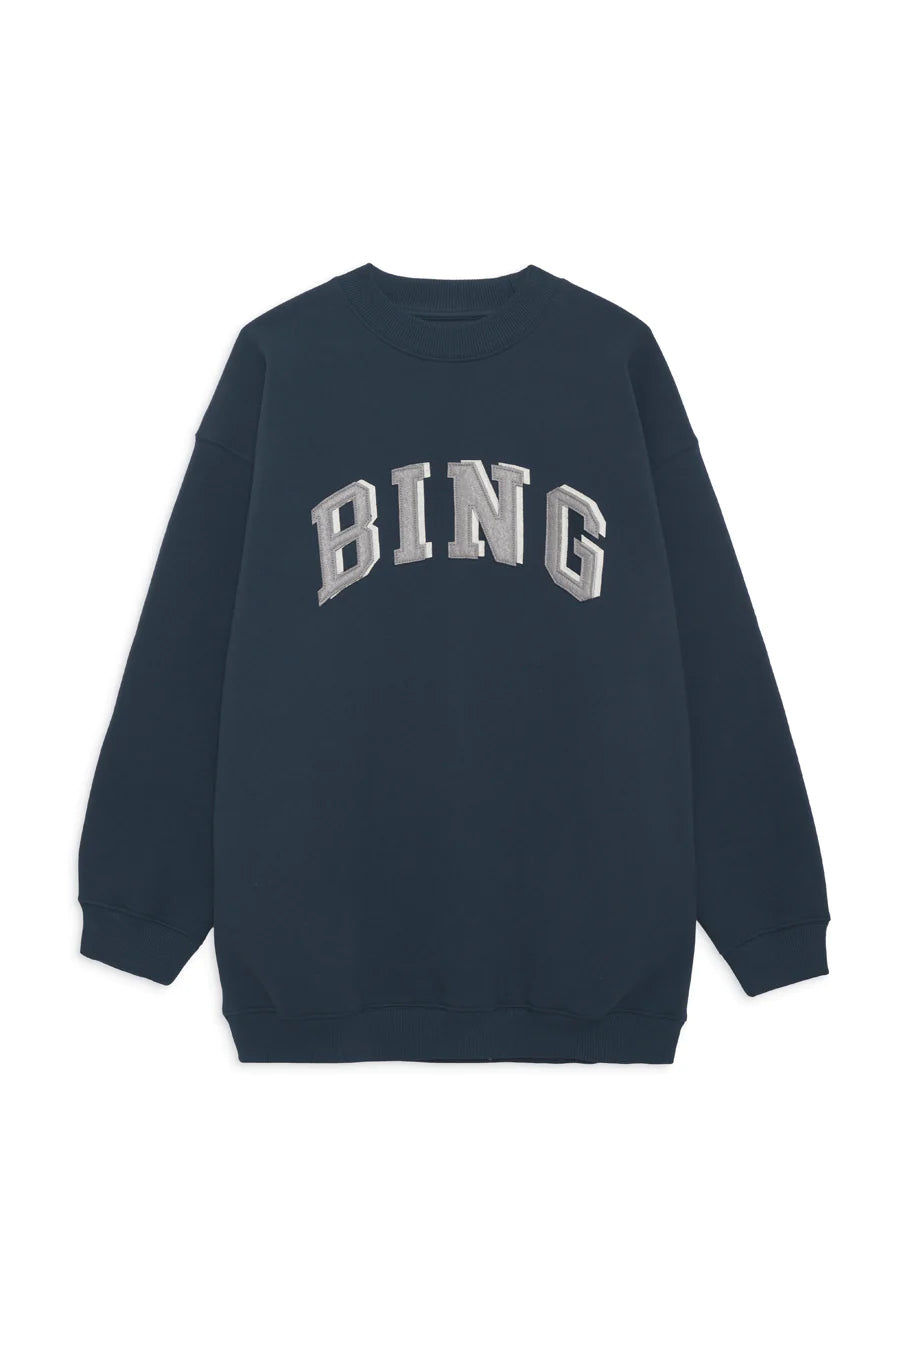 Tyler Bing Sweatshirt Navy by Anine Bing